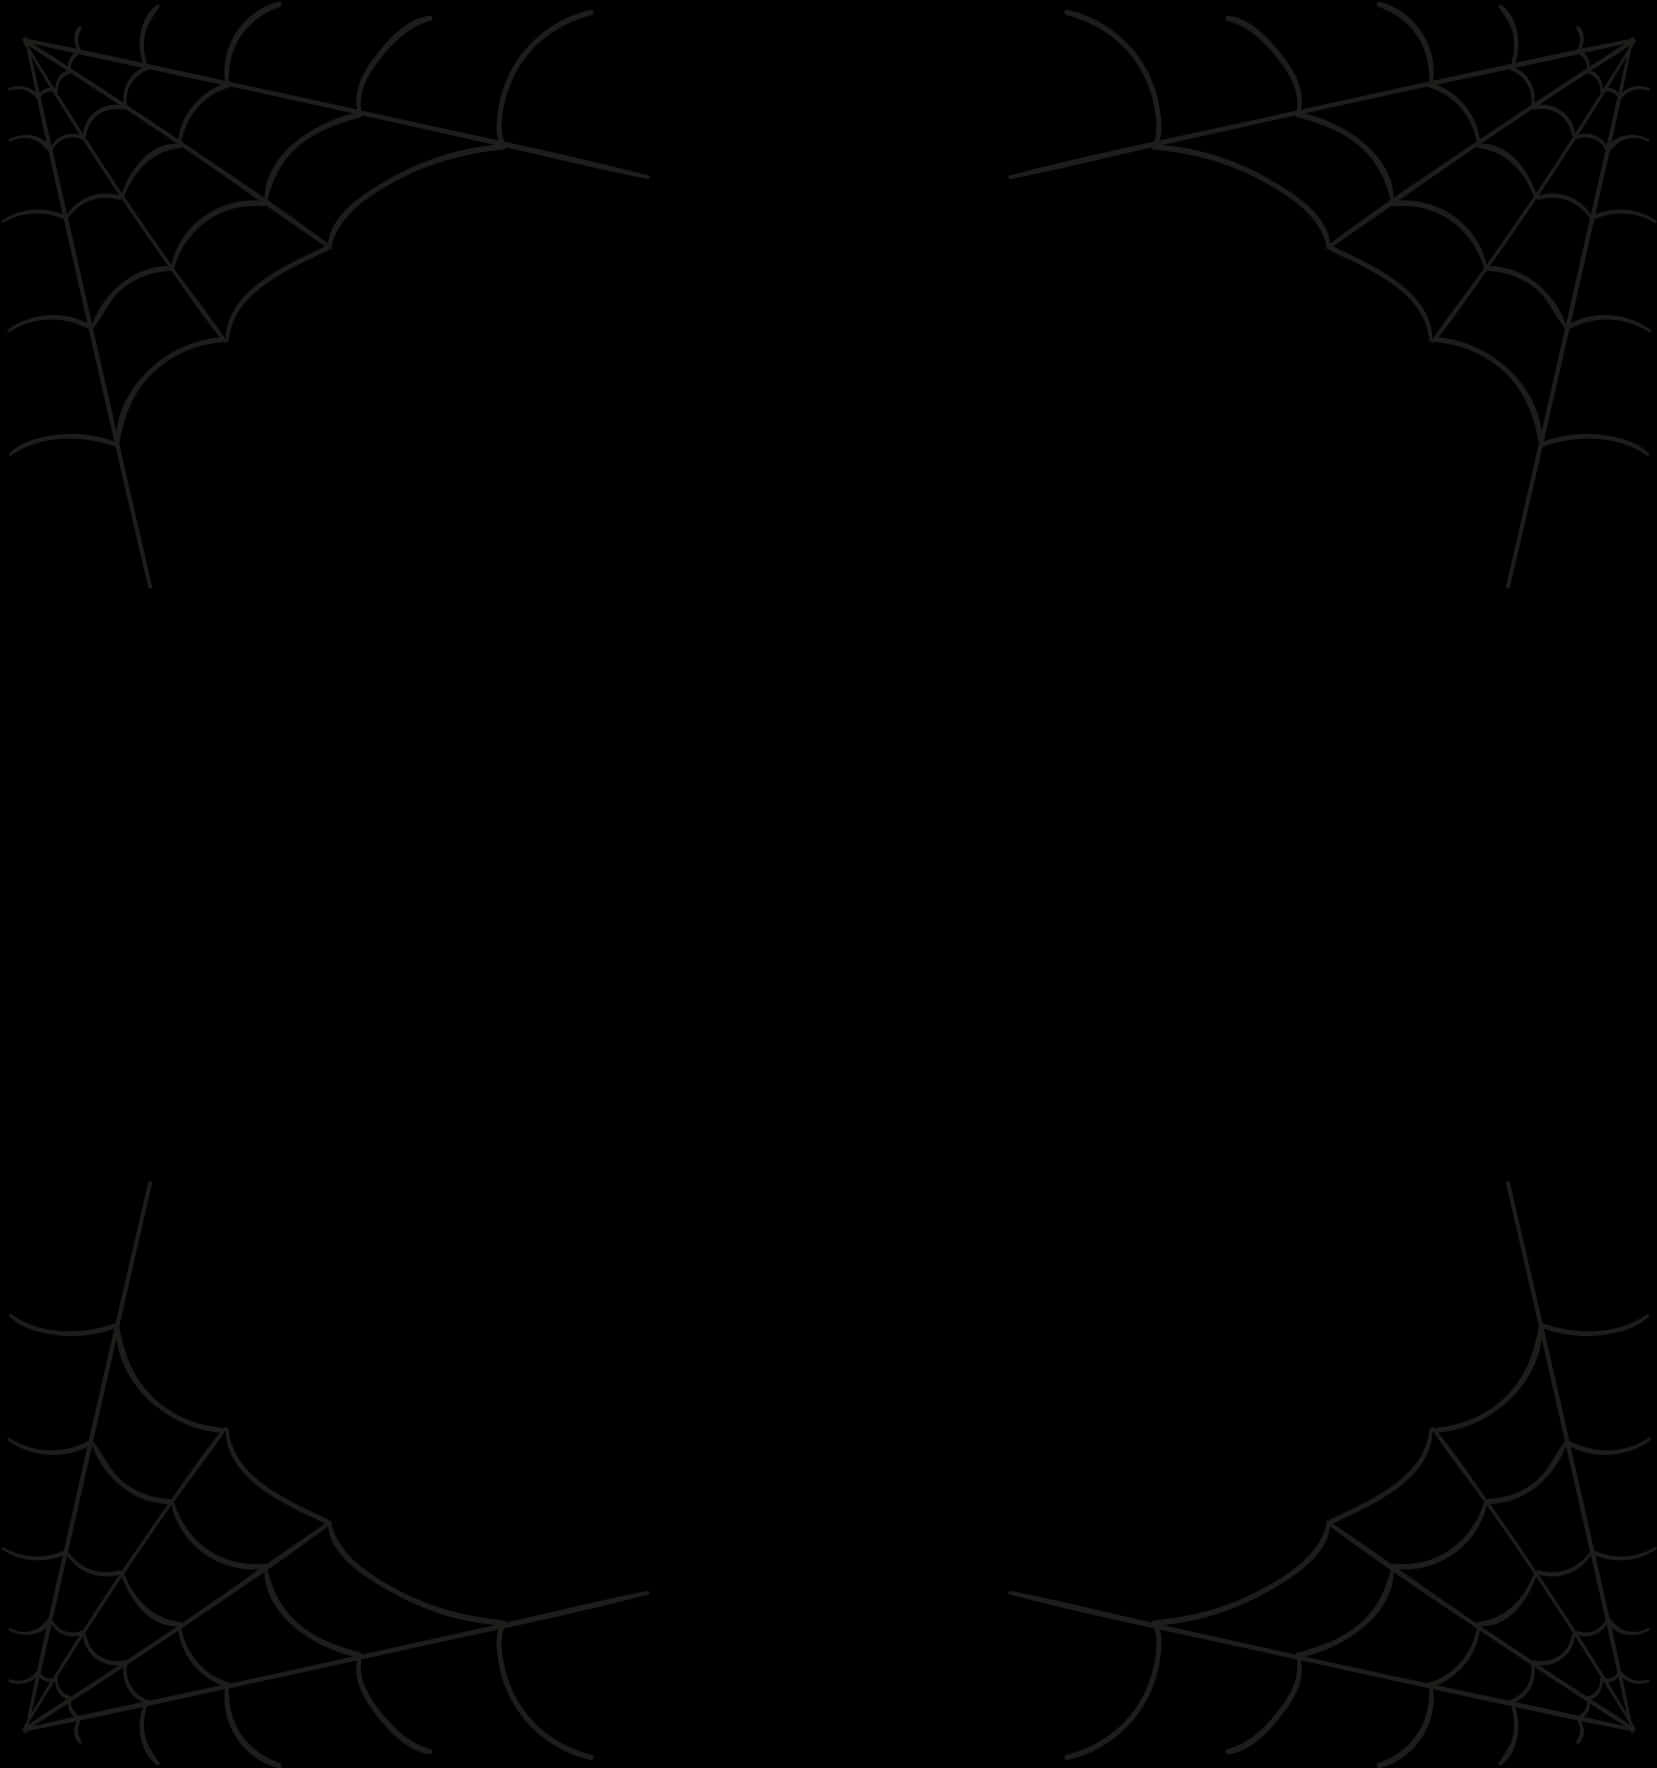 A Spider Webs On A Black Background